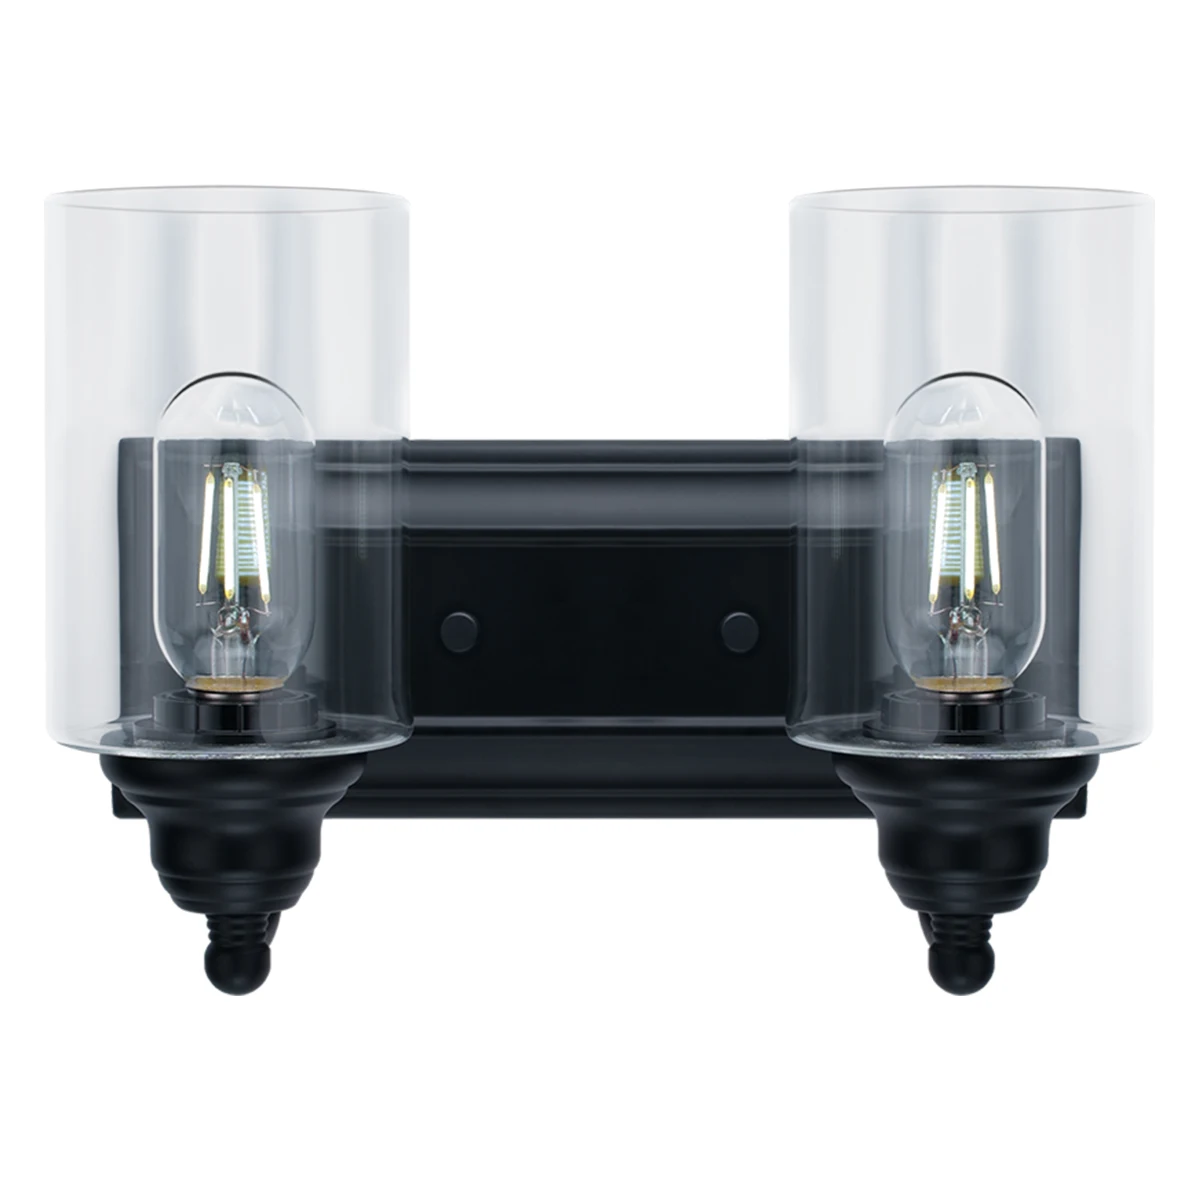 Retro 2 Clear Glass Shades Light Modern Bathroom Lighting Black E27 Base Vanity Light Fixtures Mirror Wall Lamp sconce